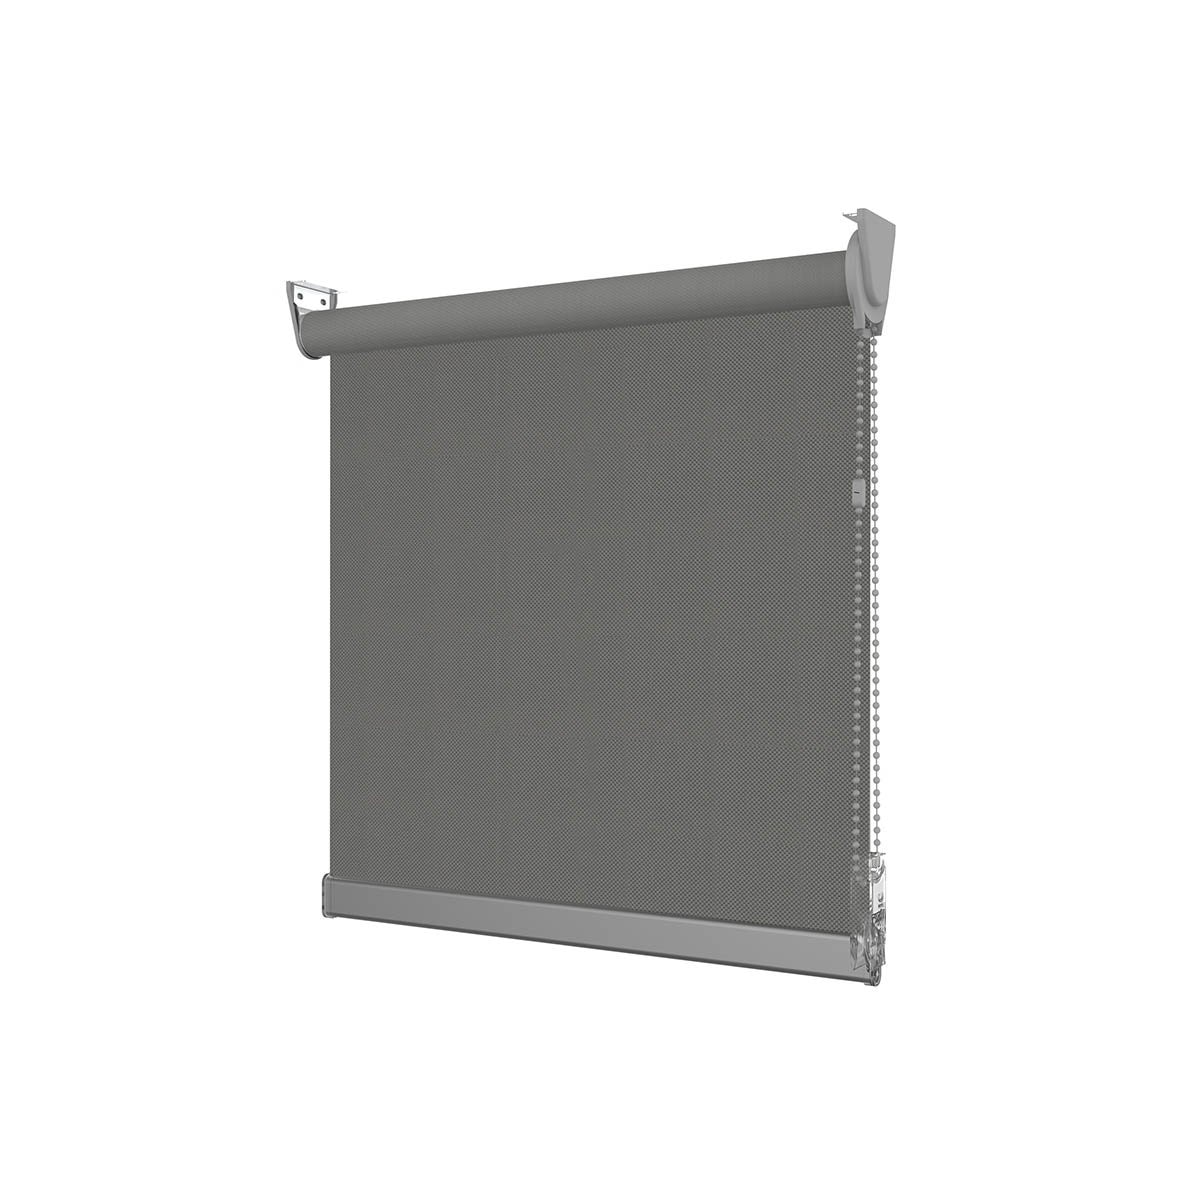 Persiana Enrollable Translucida Screen Phifer 4500 New 1.20 X 2.30 Granite Classic